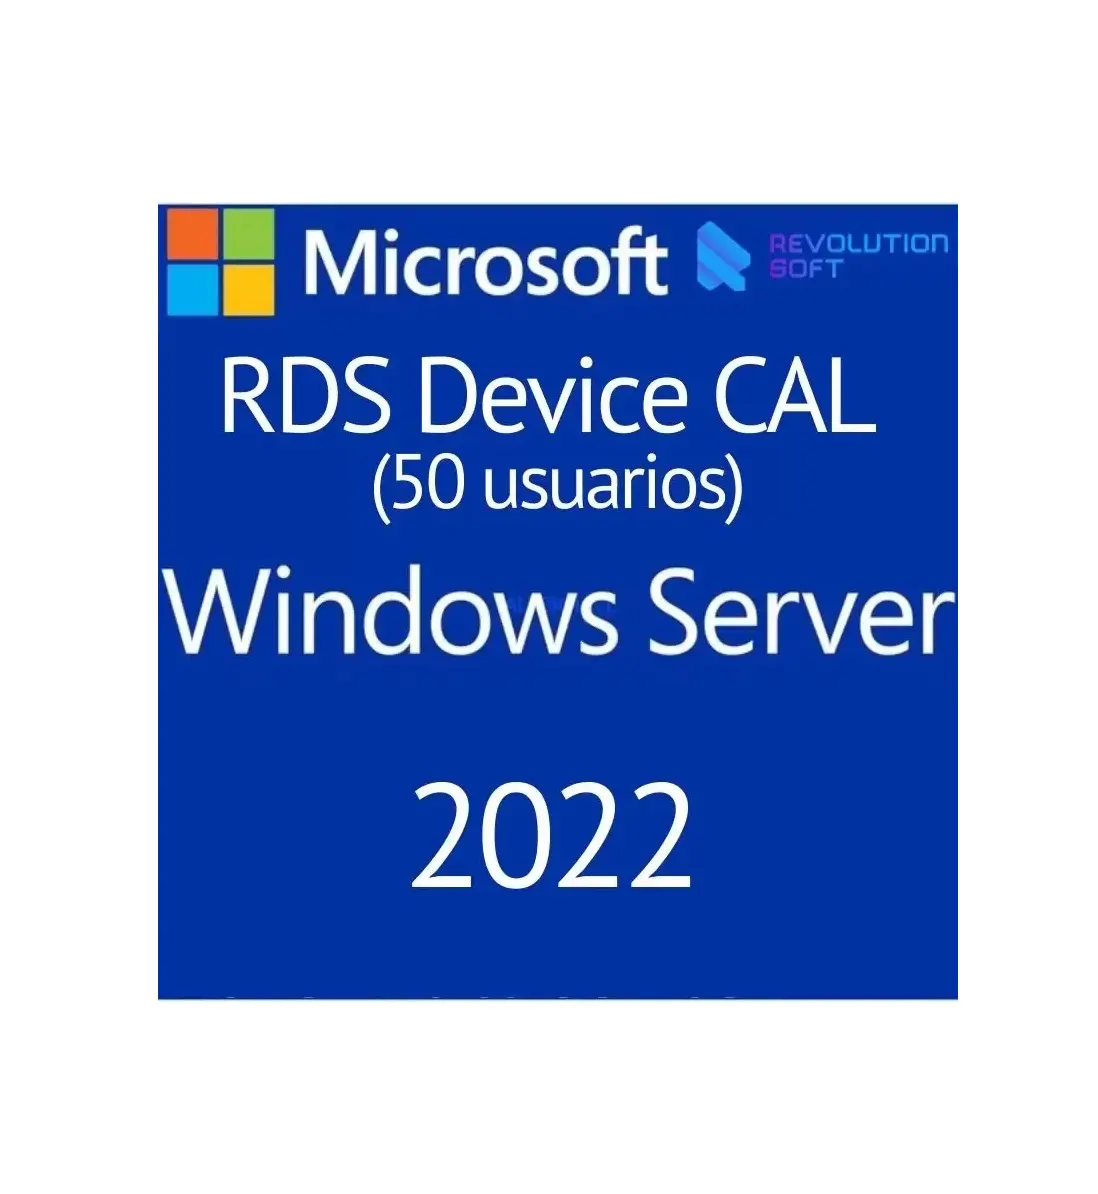 Microsoft Windows Server 2022 RDS CAL บริการเดสก์ท็อประยะไกลการเชื่อมต่ออุปกรณ์ 50 อุปกรณ์การปฏิวัติแบบนุ่ม